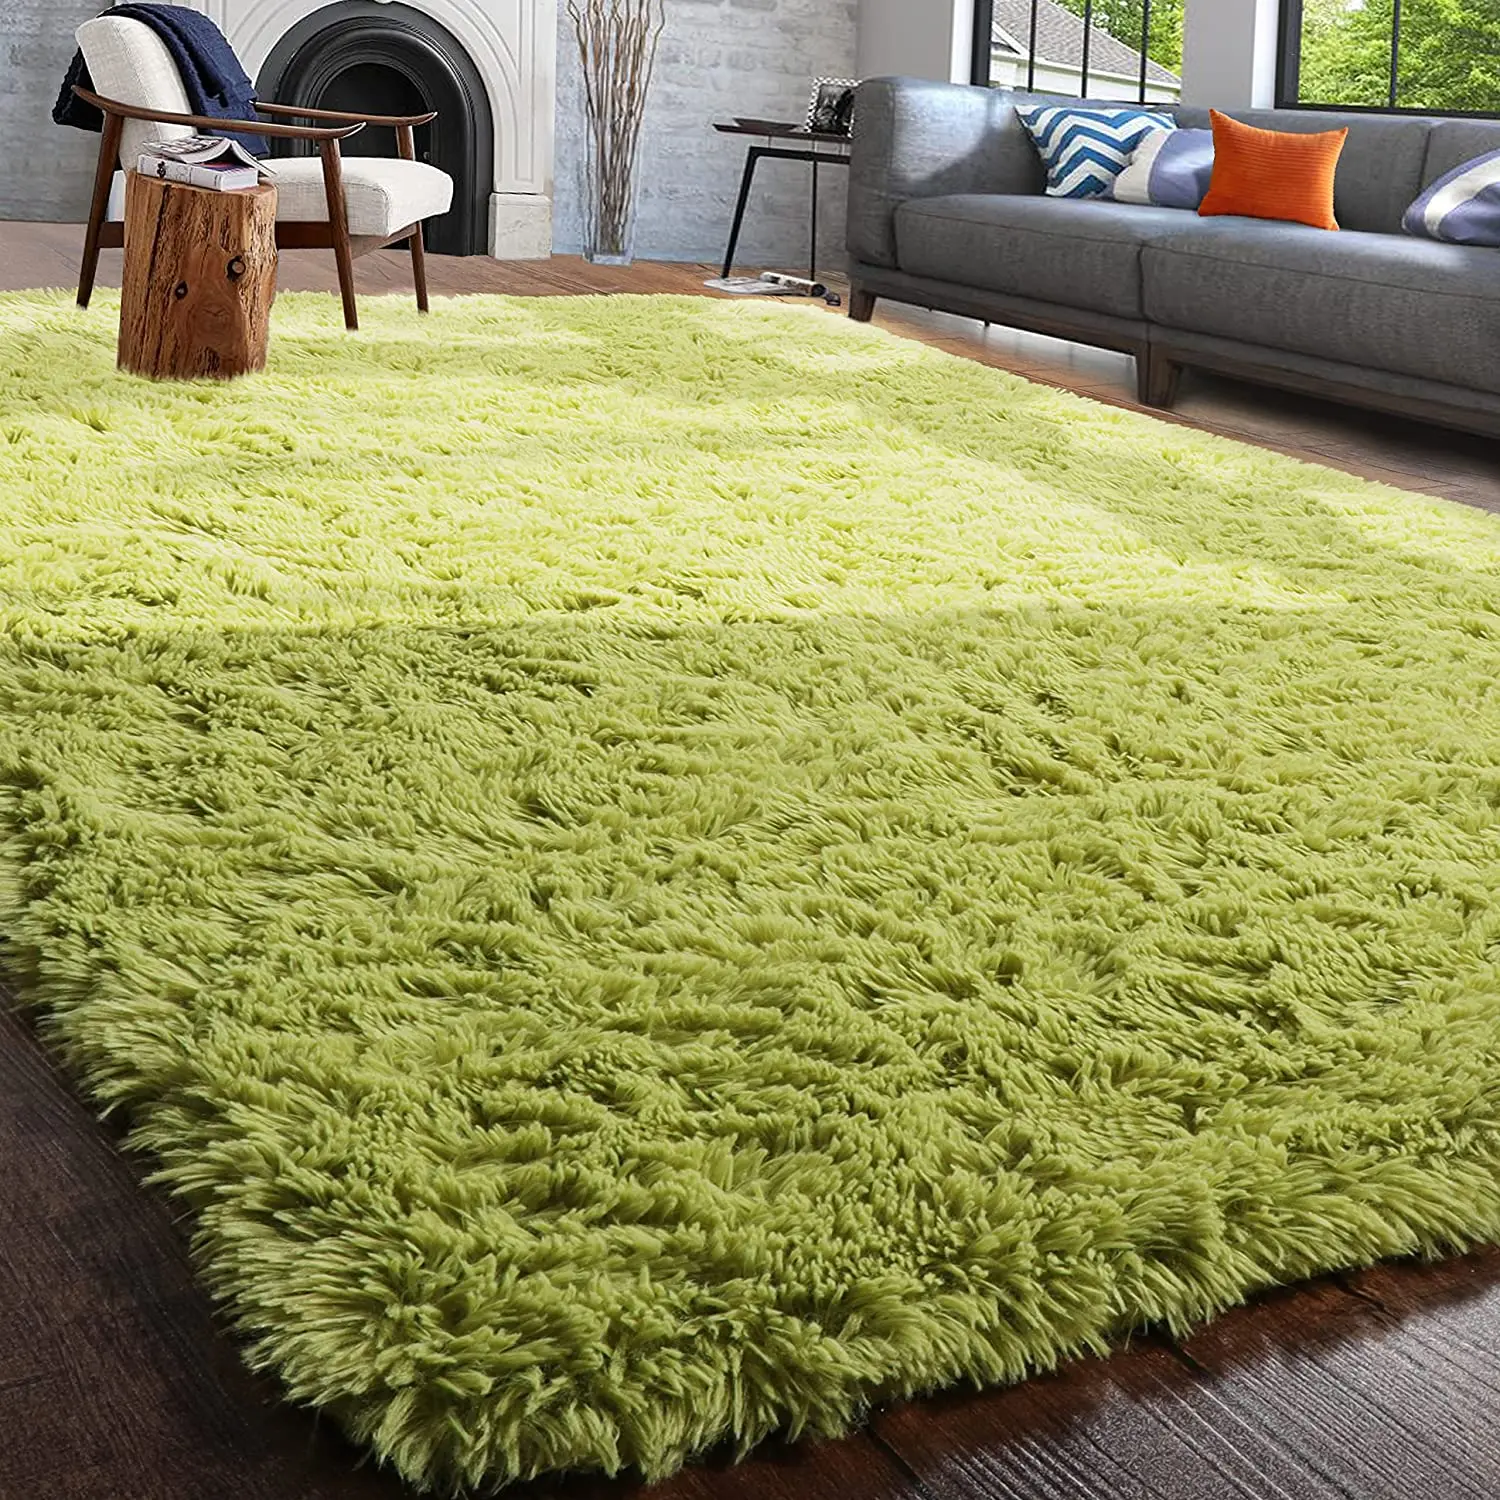 Ft green living room room carpet large furry area rugs kids mat children shaggy bedroom thumb200